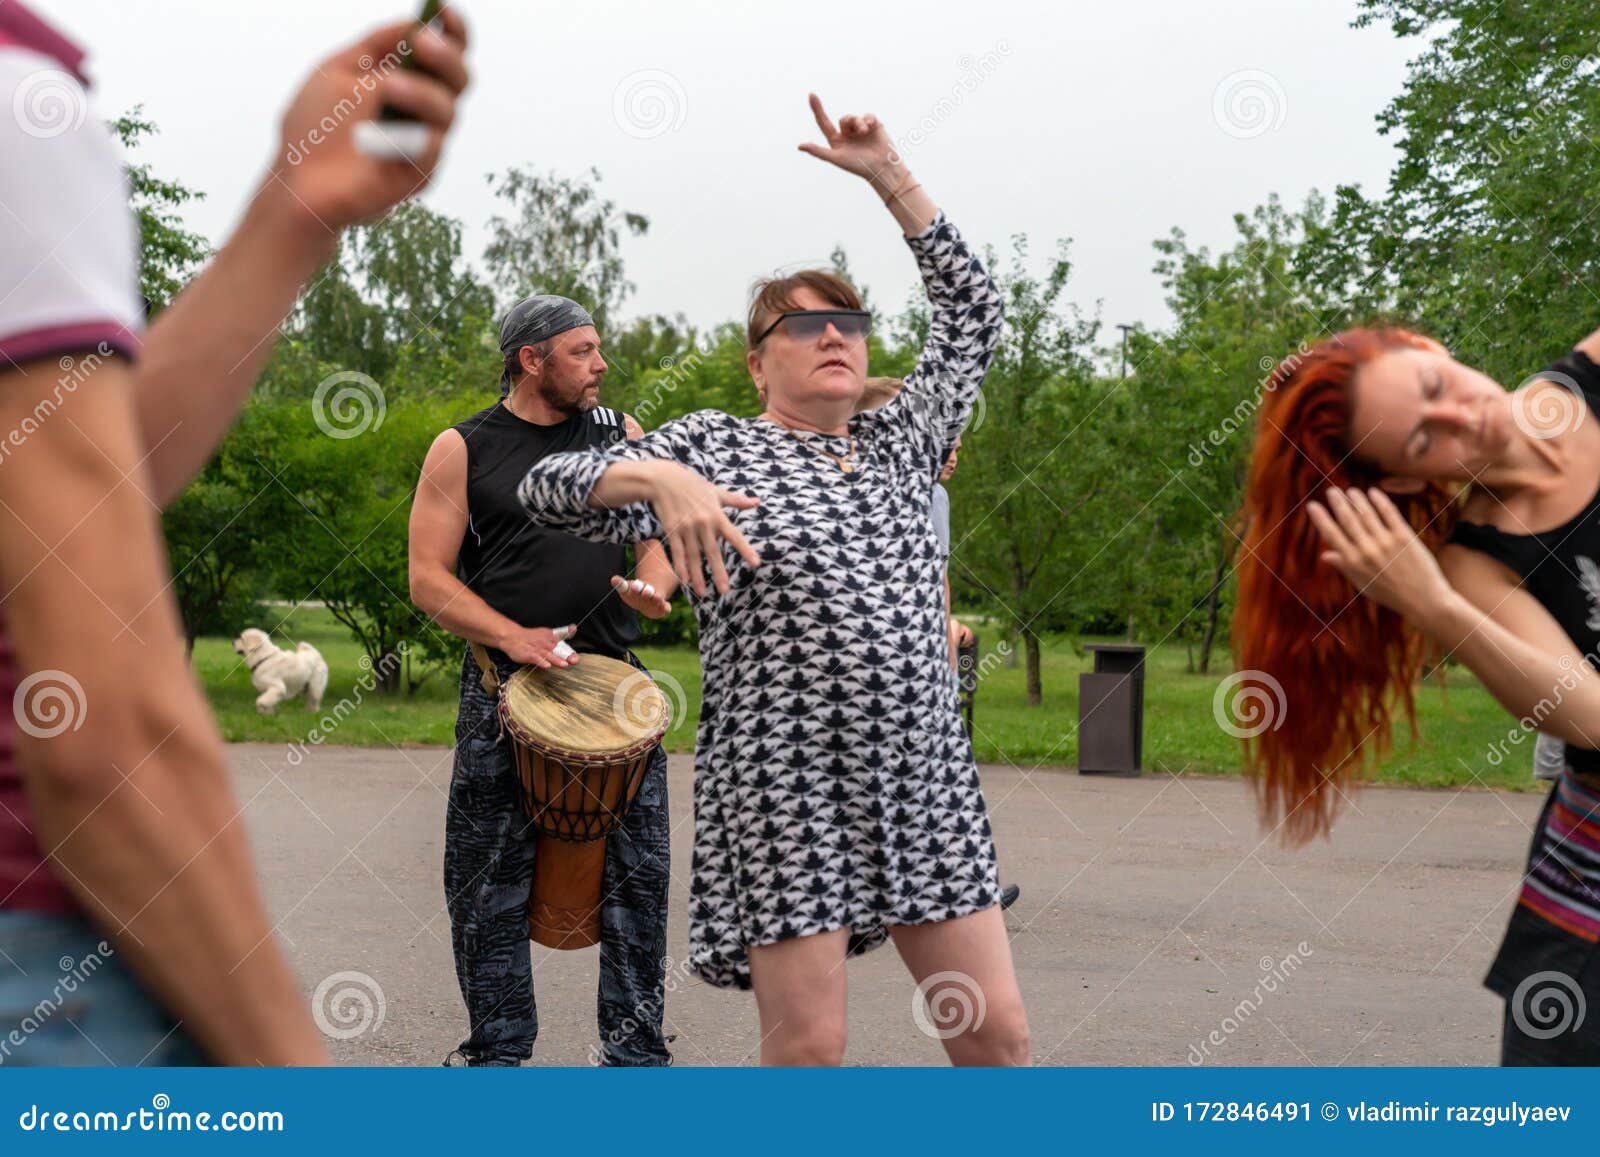 Krasnoyarsk, Russia, June 30, 2019: an Adult Female Freak Dances To